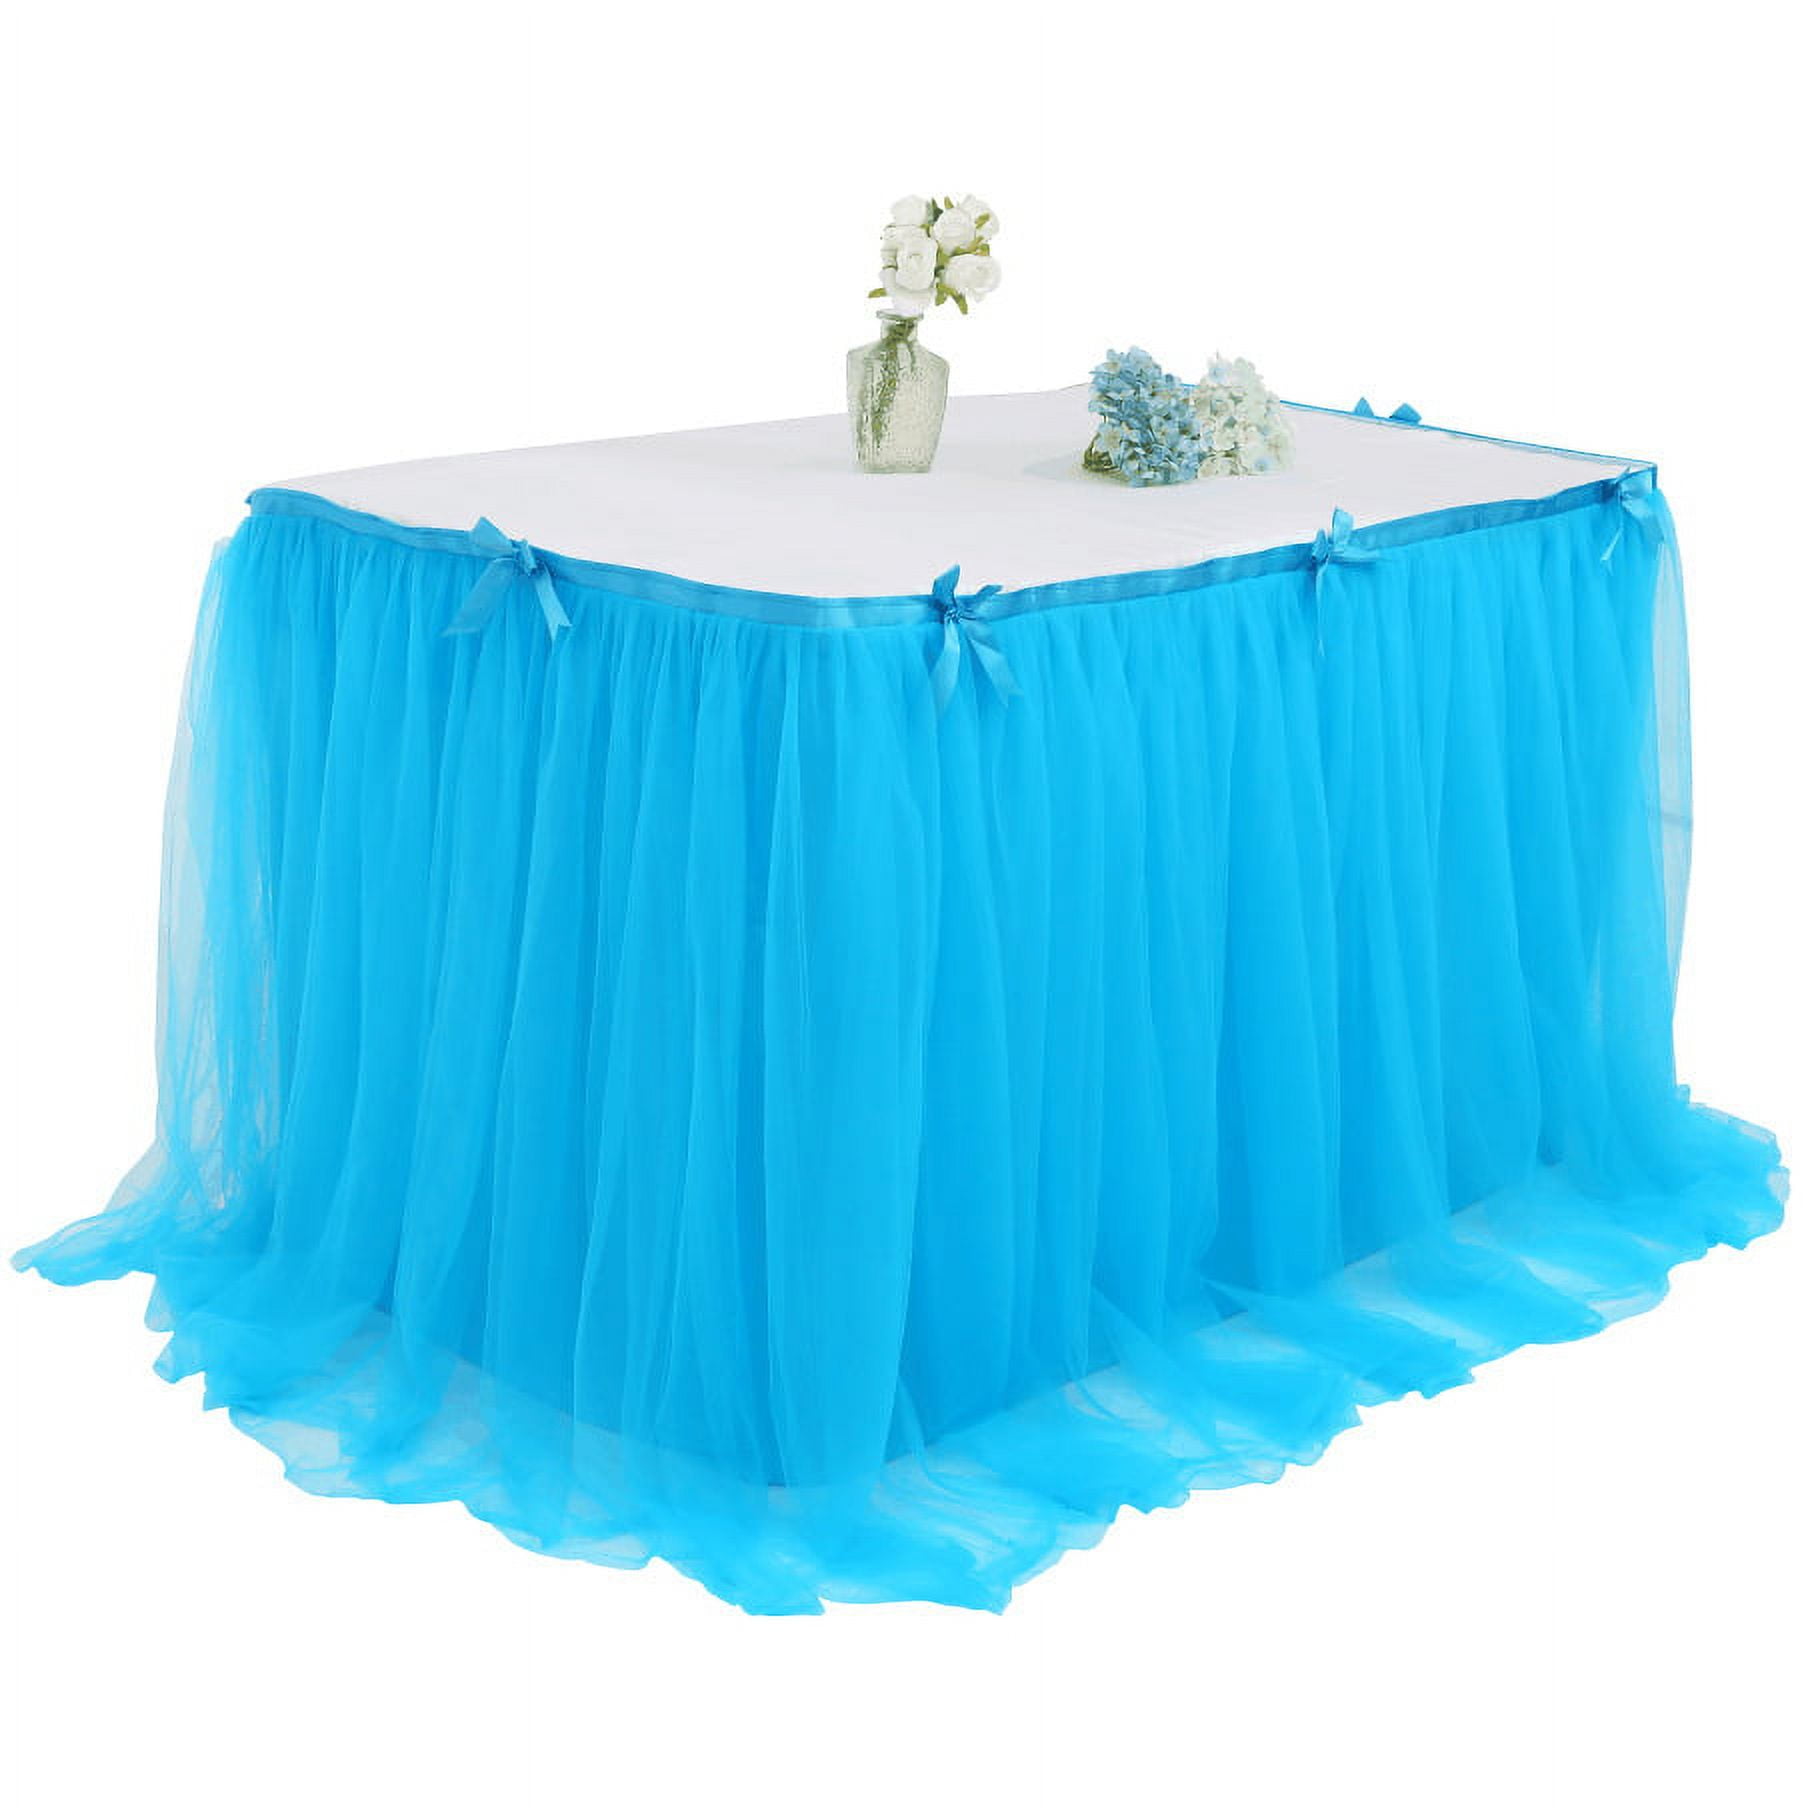 GetUSCart- Bluekate Blue Tutu Table Skirt. 6ft Table Skirt with